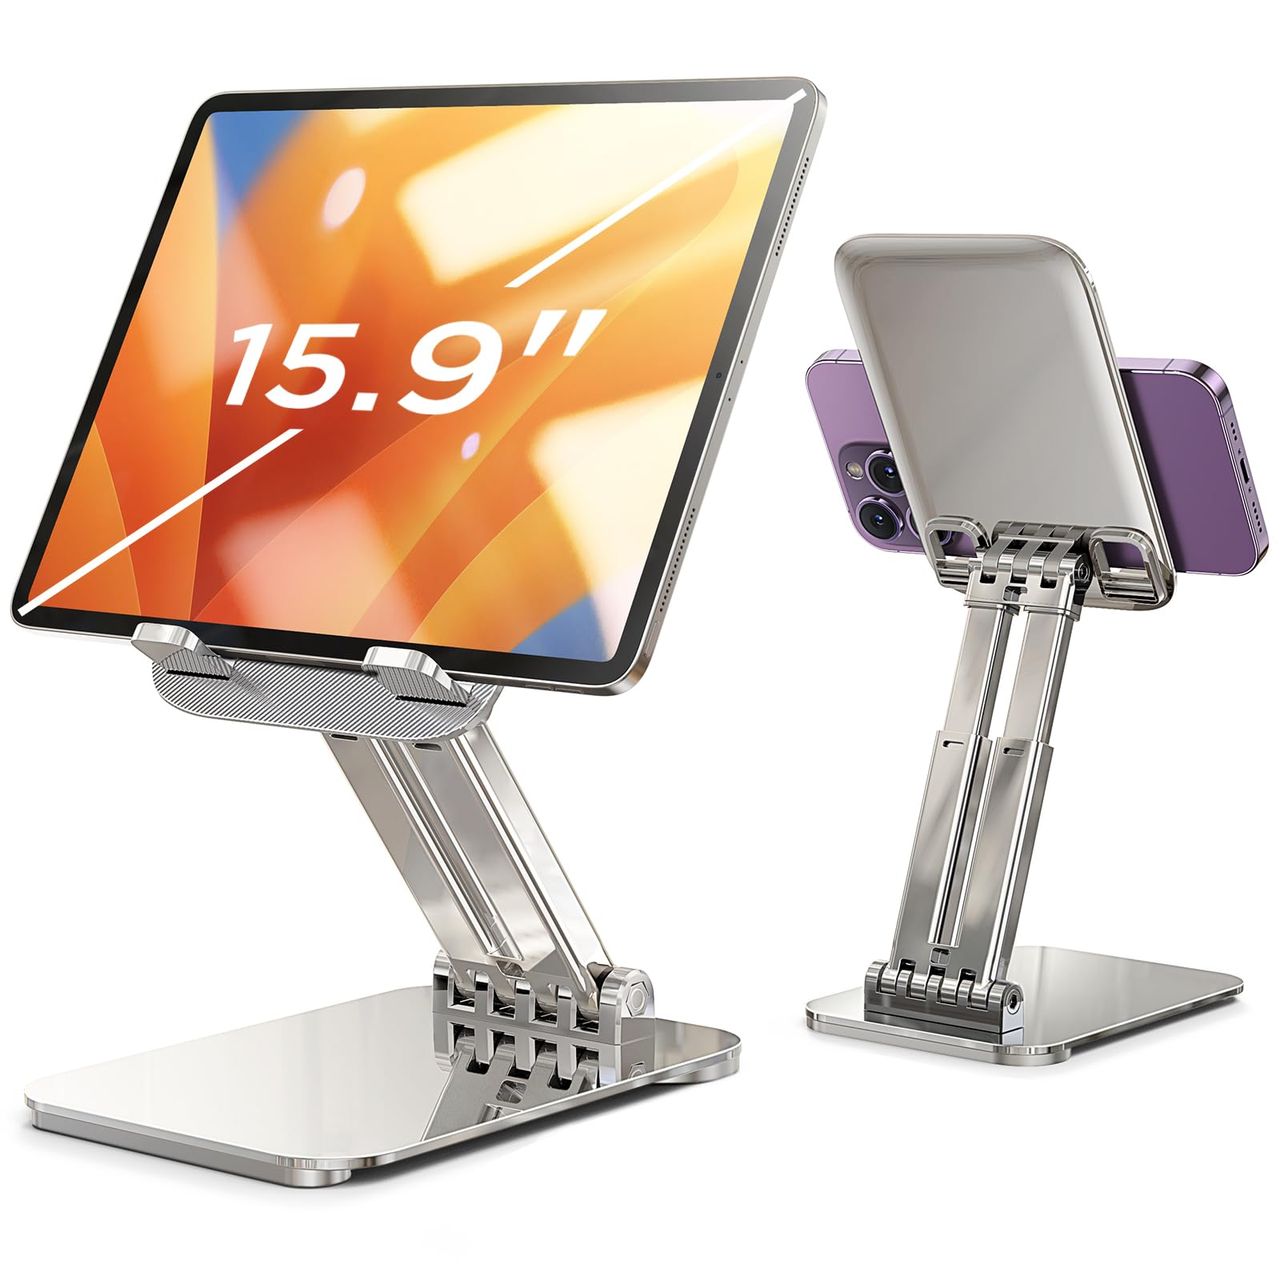 LISEN iPad スタンド タブレット スタンドiPad 最大15.9インチに対応 モバイルモニター スタンド 卓上 角度自由調整 ipad mini スタンド 折りたたみ iPadスタンド アルミ合金製 タブレットホルダー 滑り止め 安定性拔群 置き台 テーブル 人間工学設計